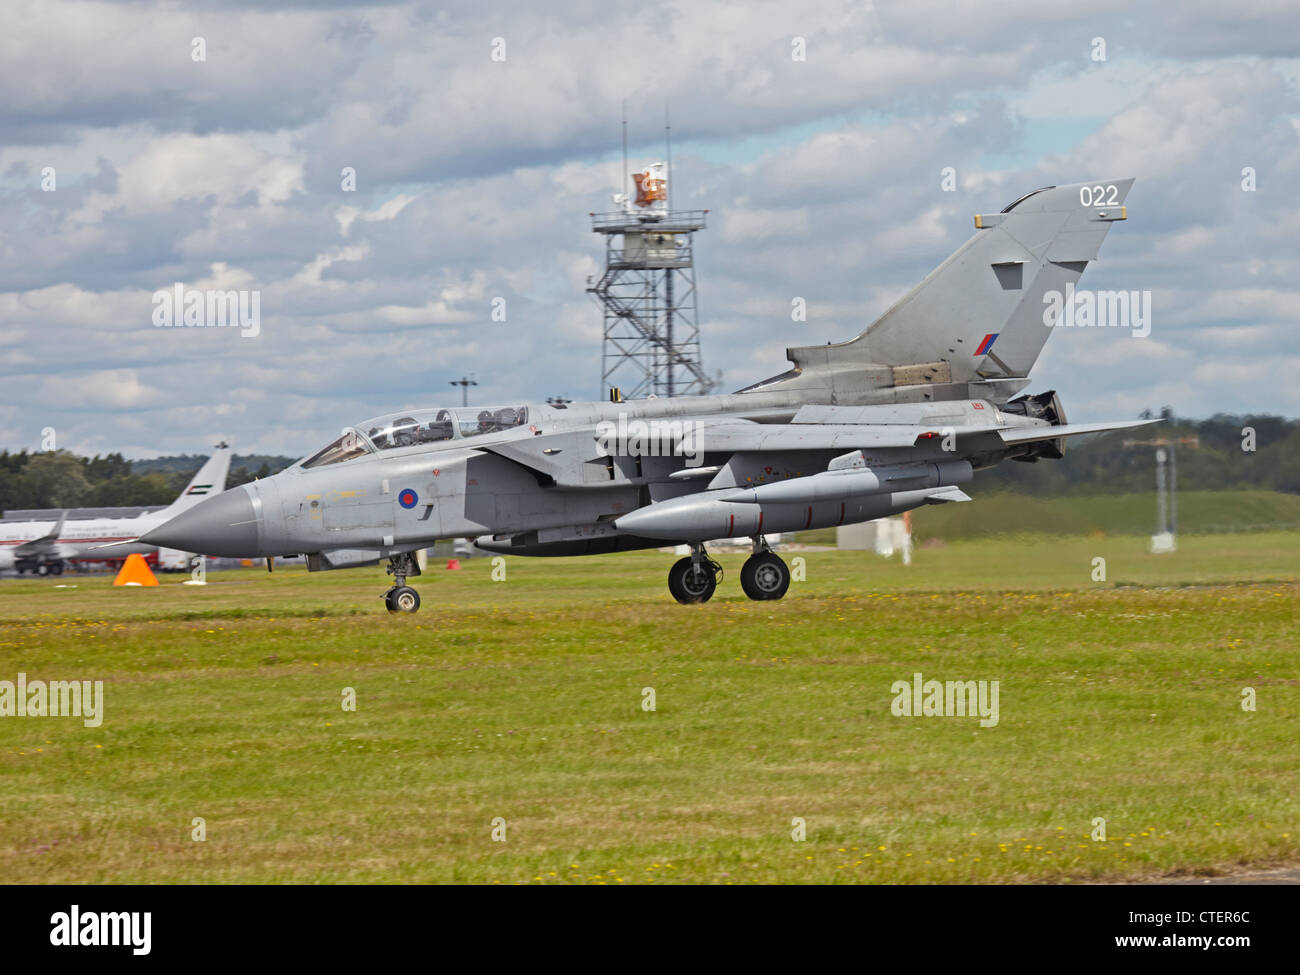 Farnborough International Airshow RAF Tornado GR4 variable-sweep wing combat aircraft landing Stock Photo